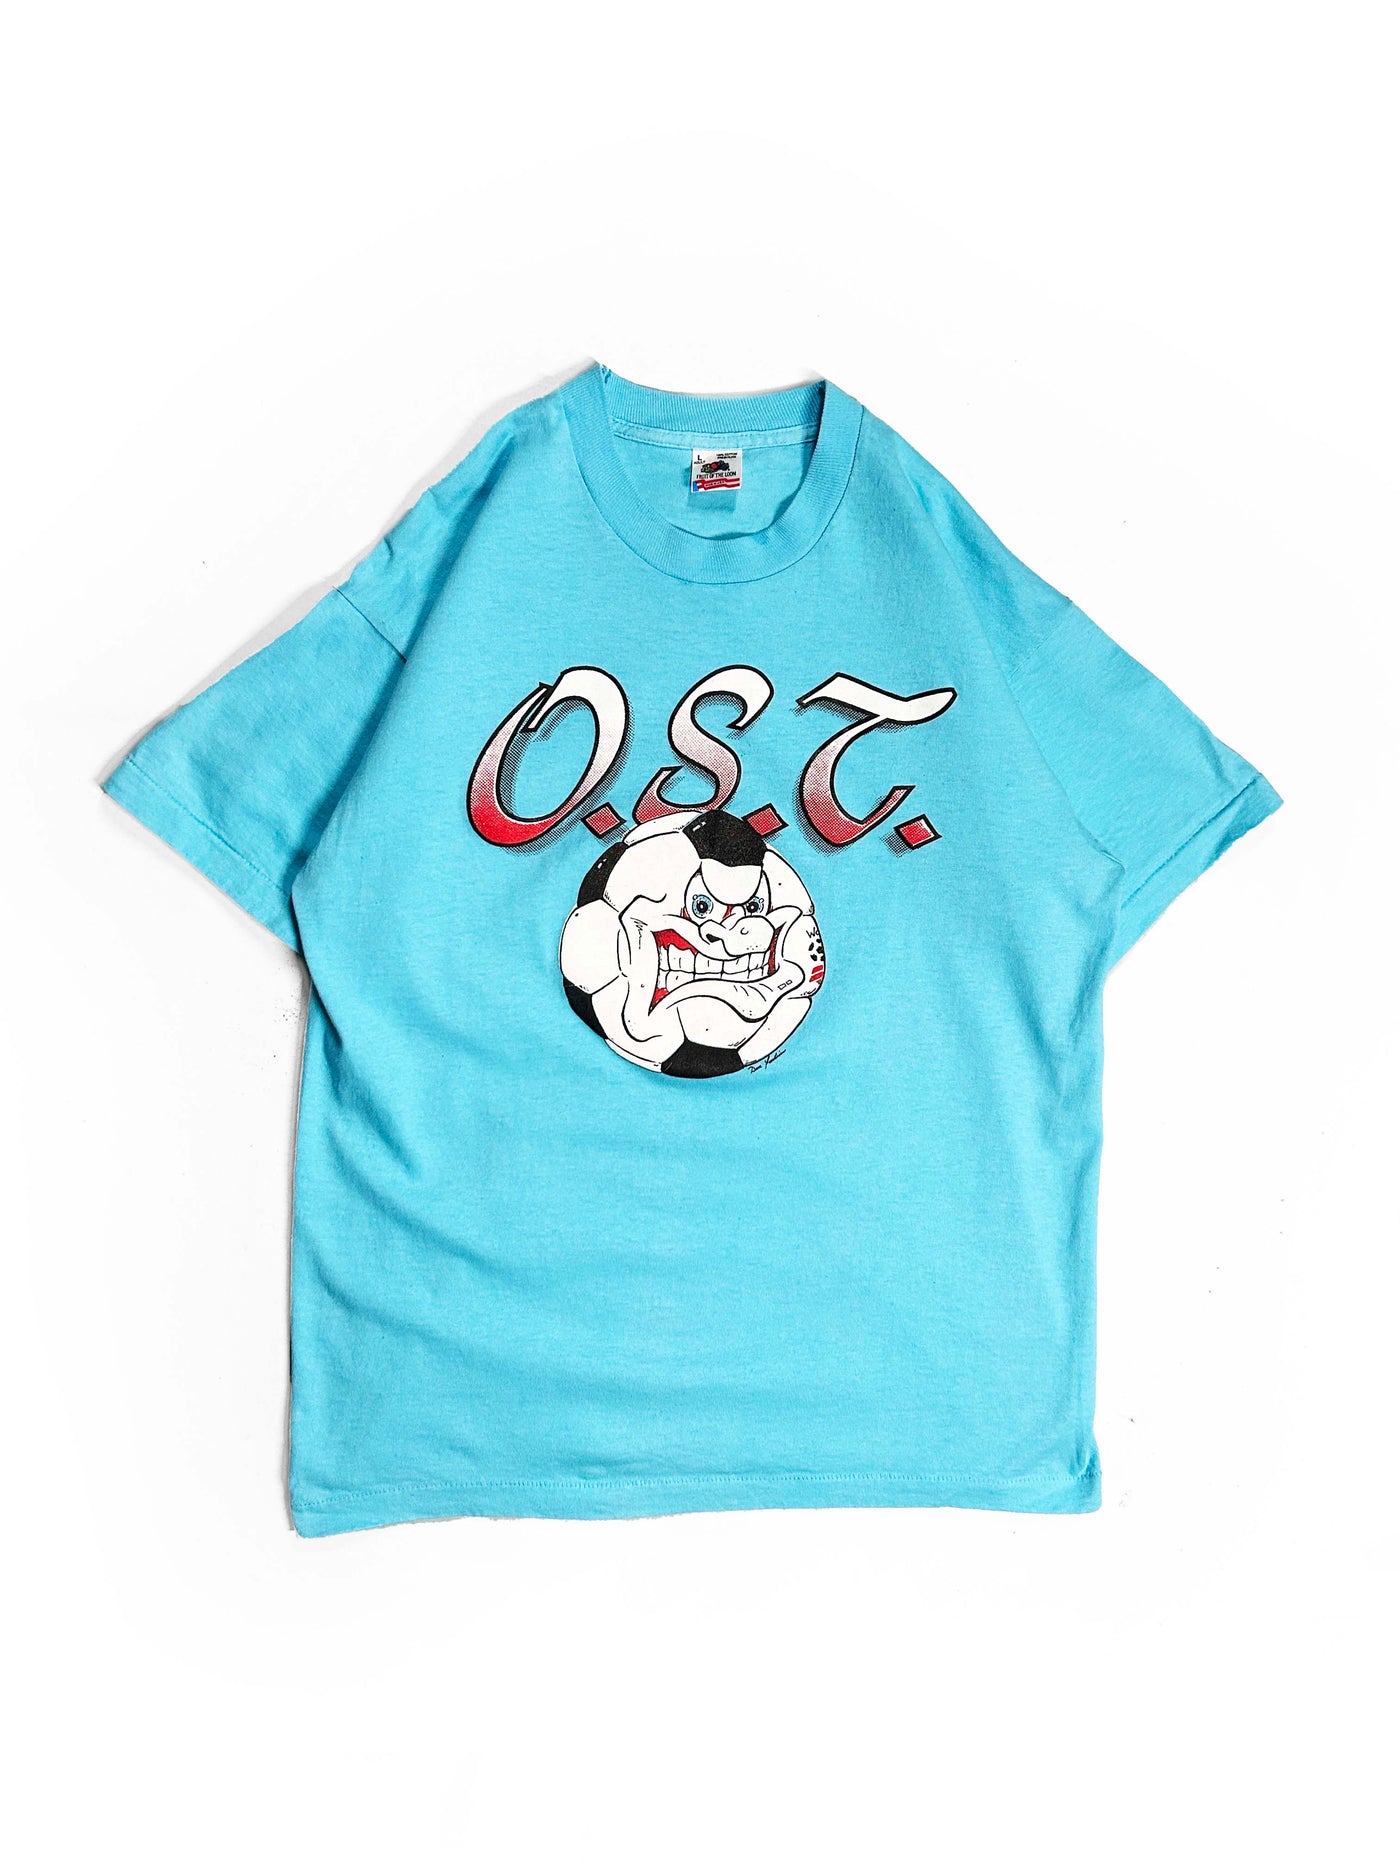 Vintage 80s O.S.J’s Soccer T-Shirt